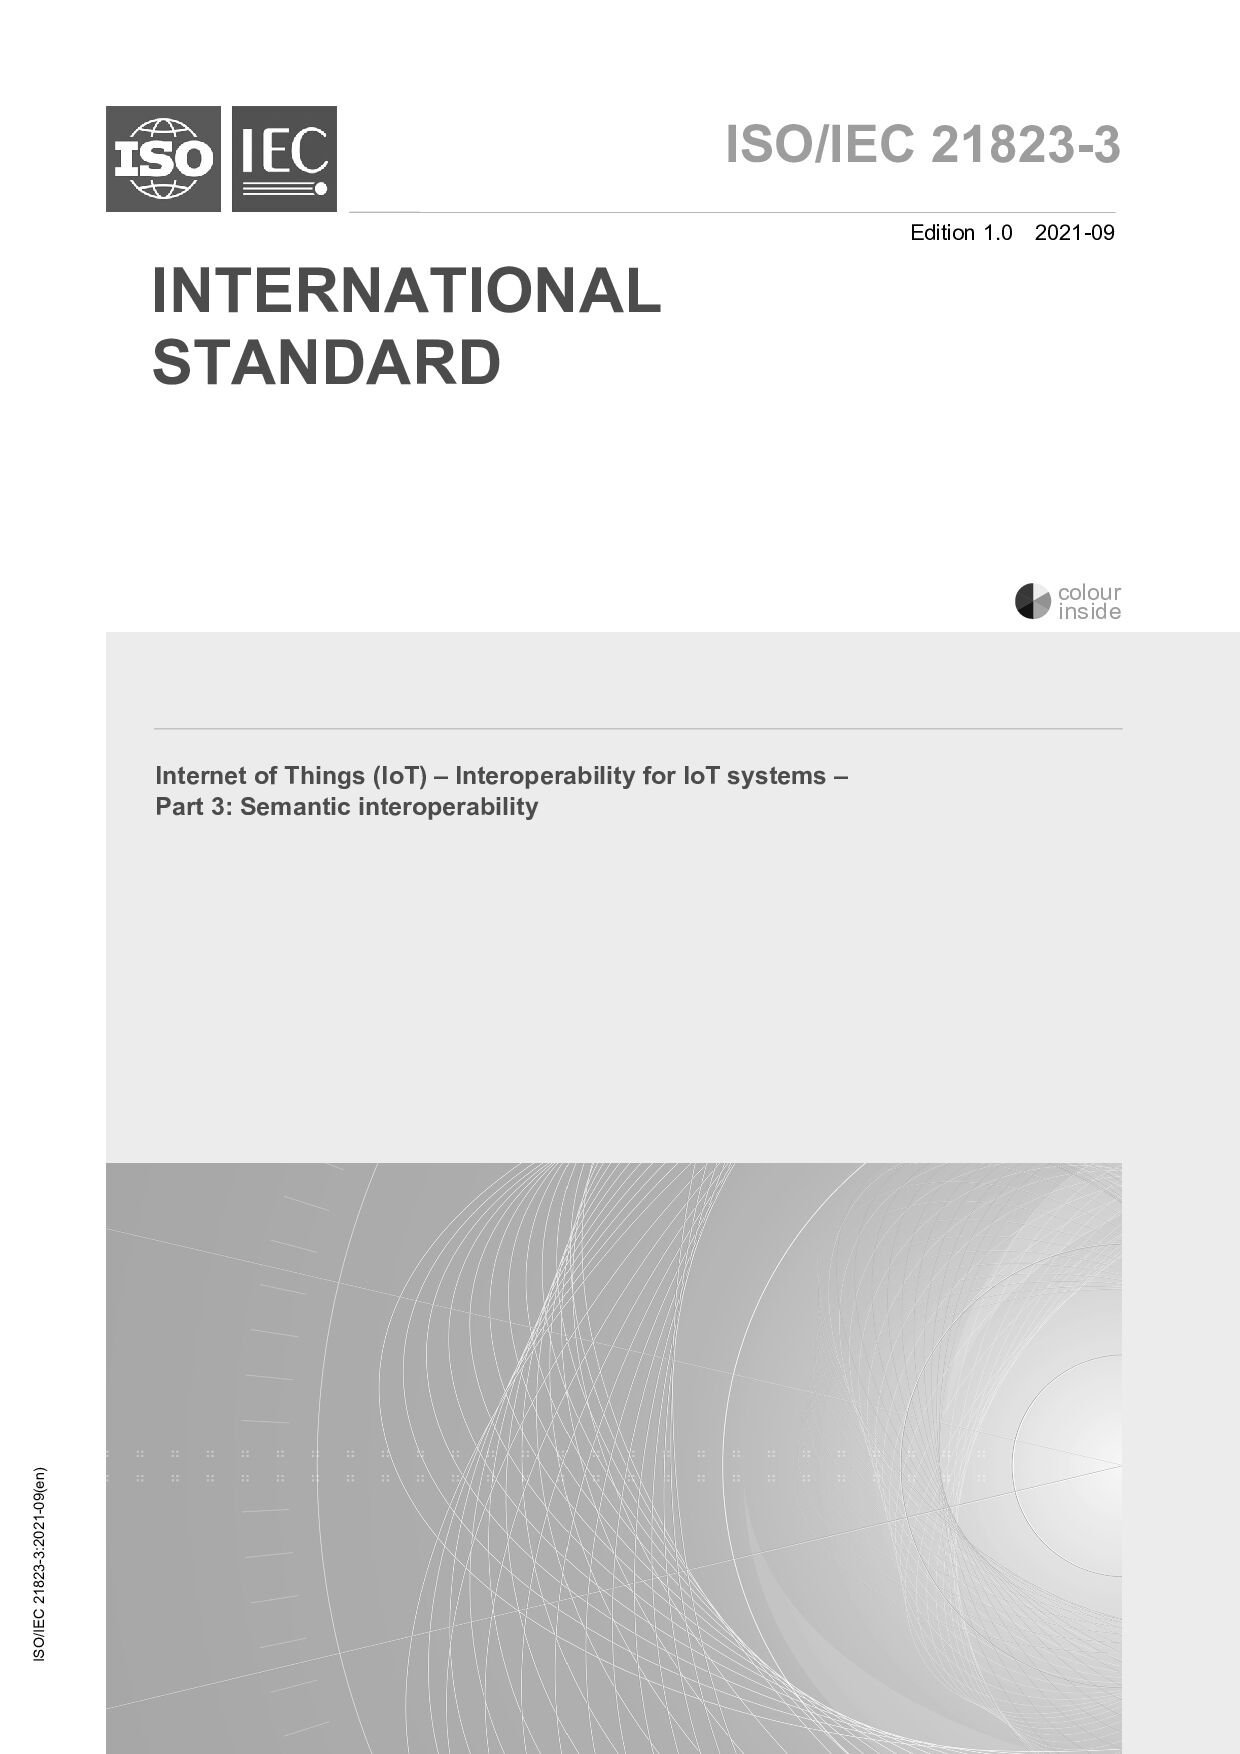 ISO/IEC 21823-3:2021